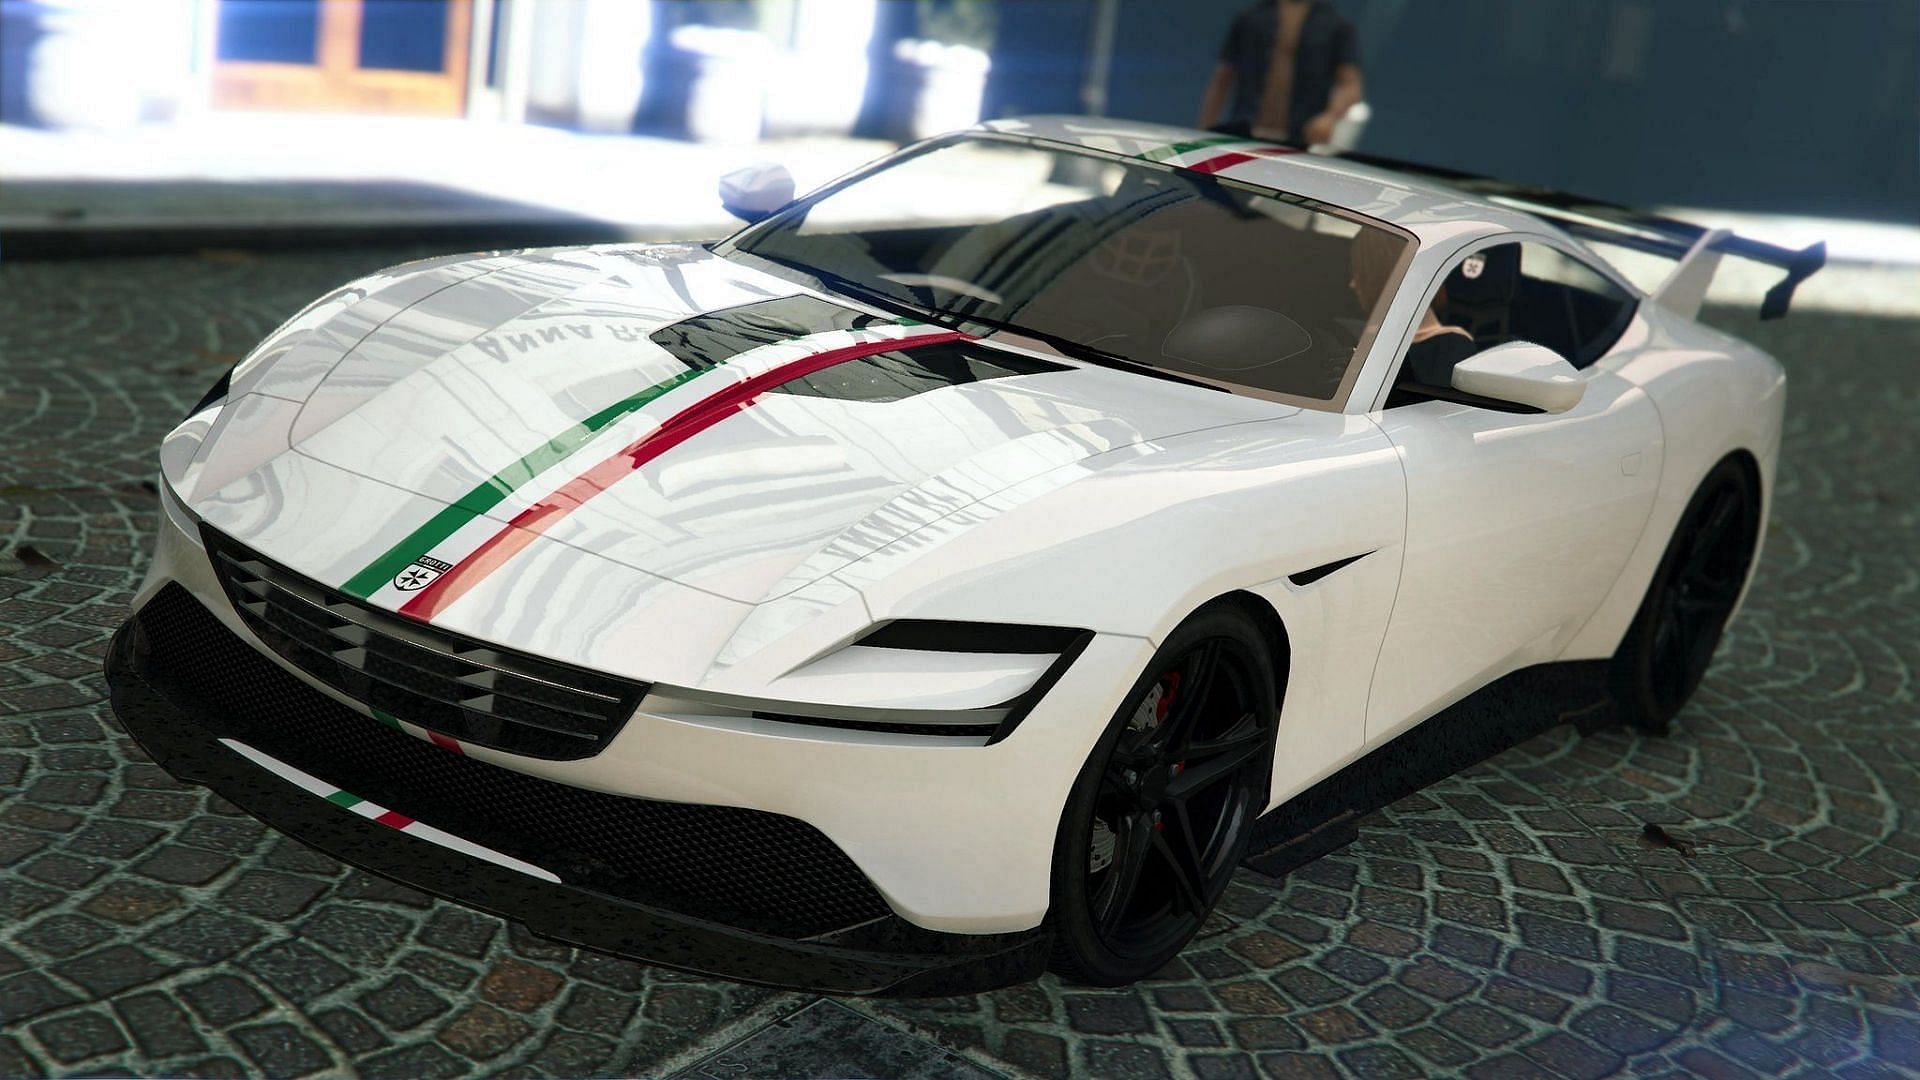 The Itali GTO Stinger TT has an impressive design (Image via Twitter/unka_black_)